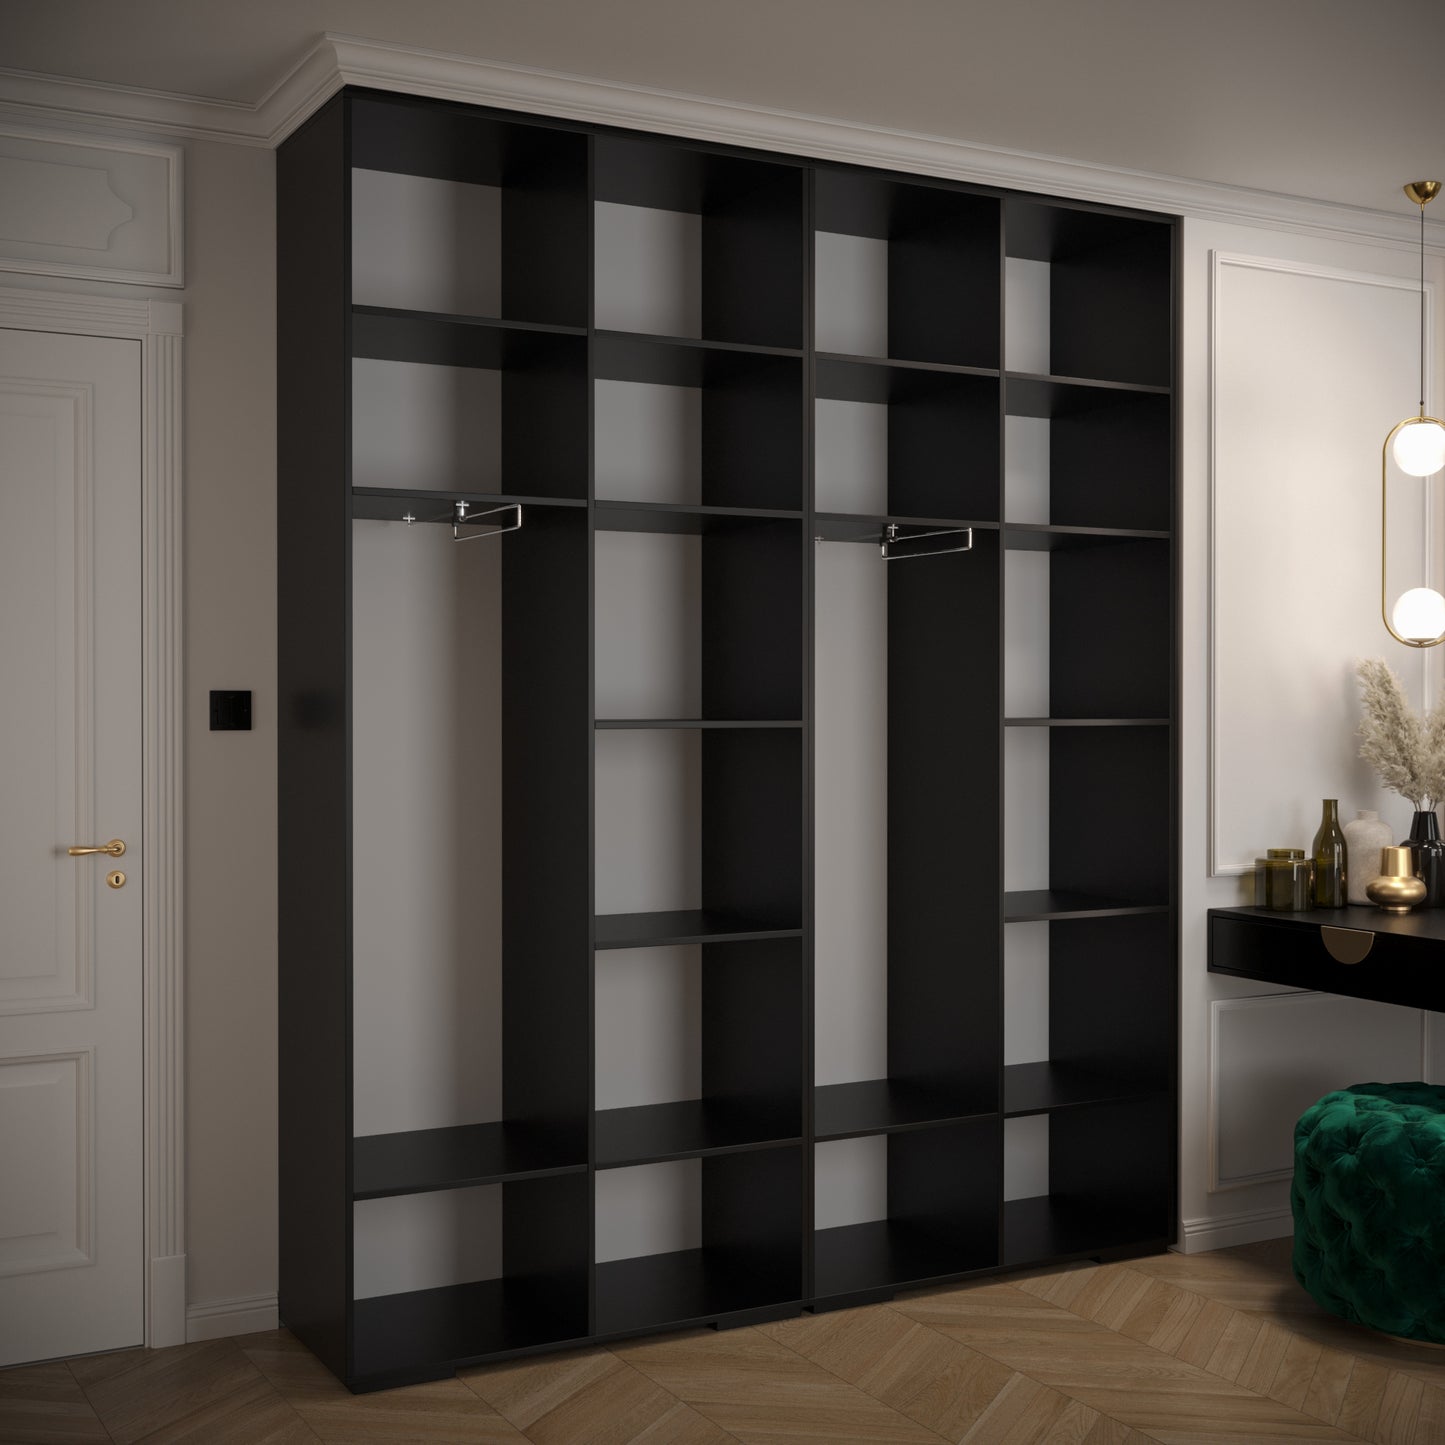 MANHATTAN 1.2 - Wardrobes Closet with Shelves, Metal Rail, Black or White > 200 cm <